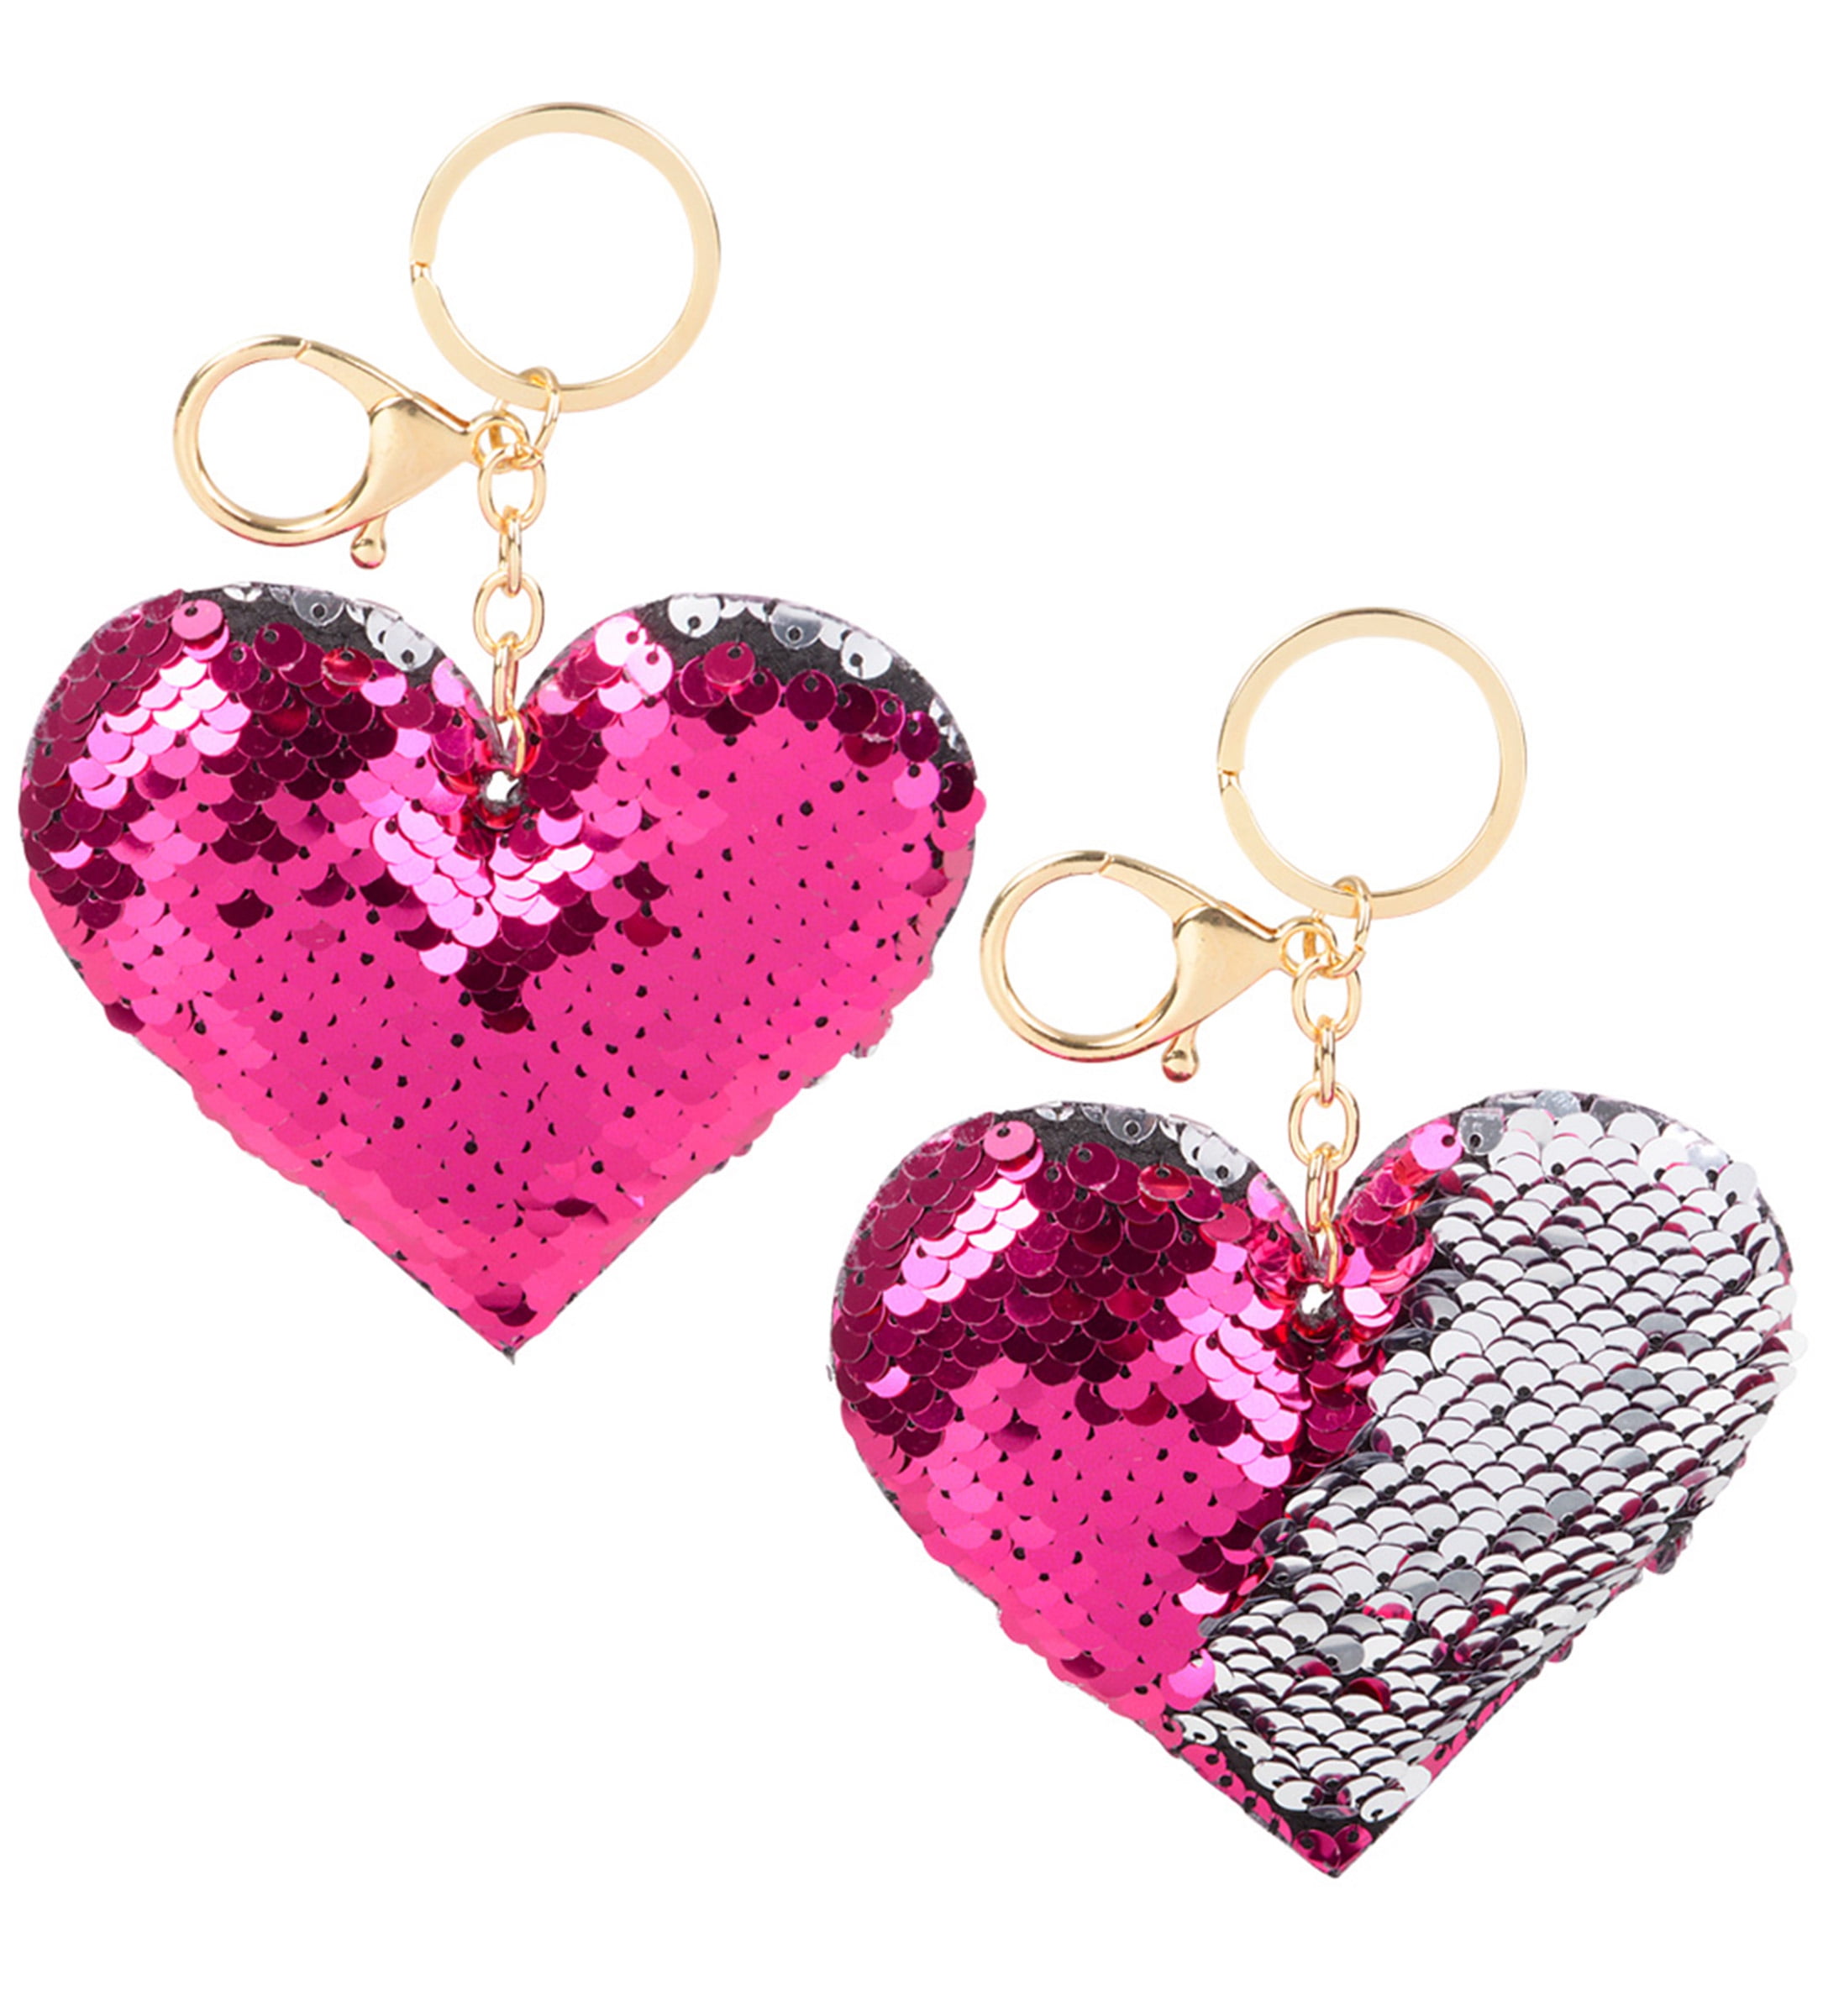 Resin Photo Keychain Heart Keychain Heart Picture Keychain Flower Heart Keychain- Custom Heart Keychain Picture Keychain